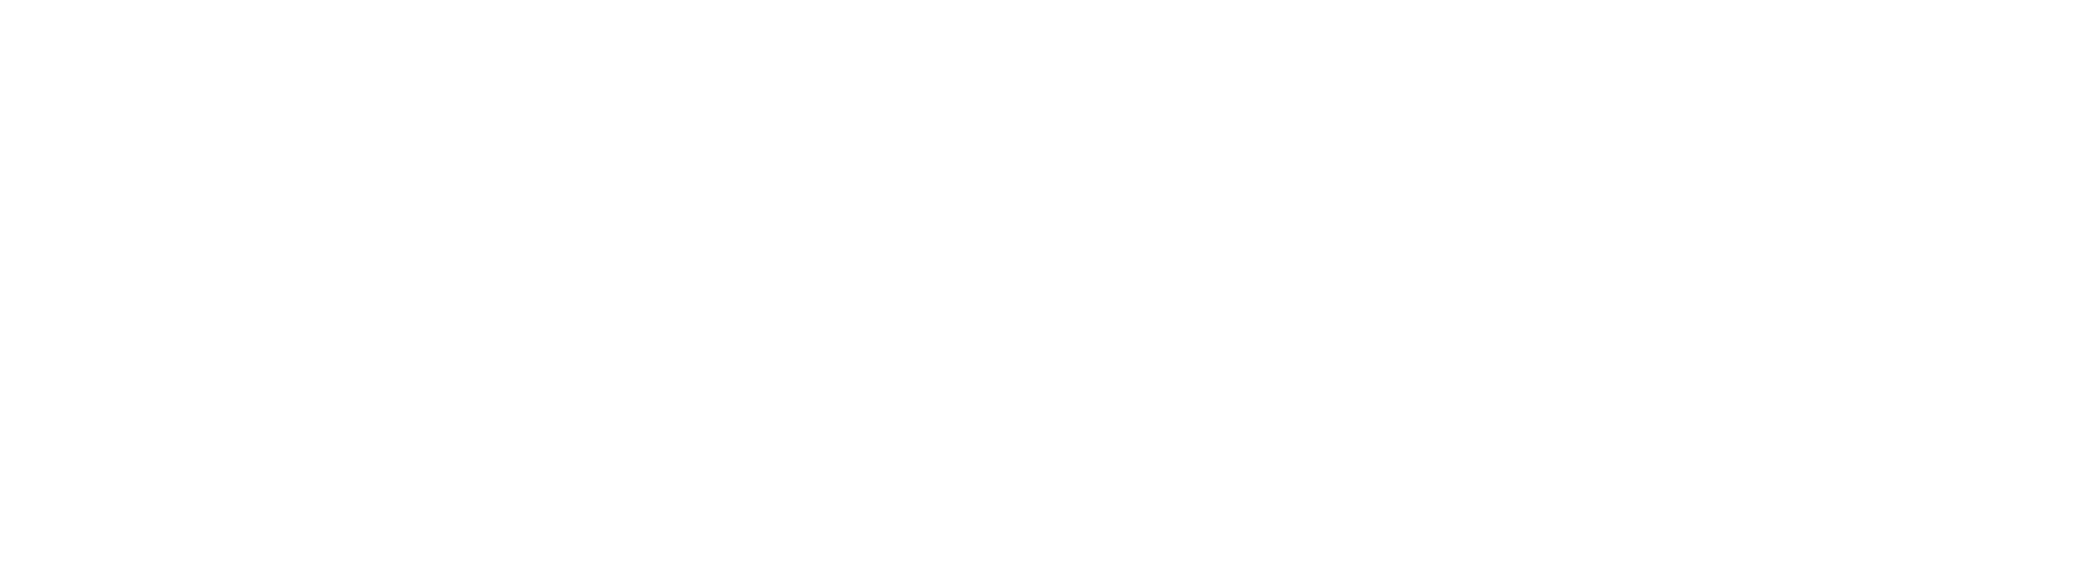 Self storage association of Australia